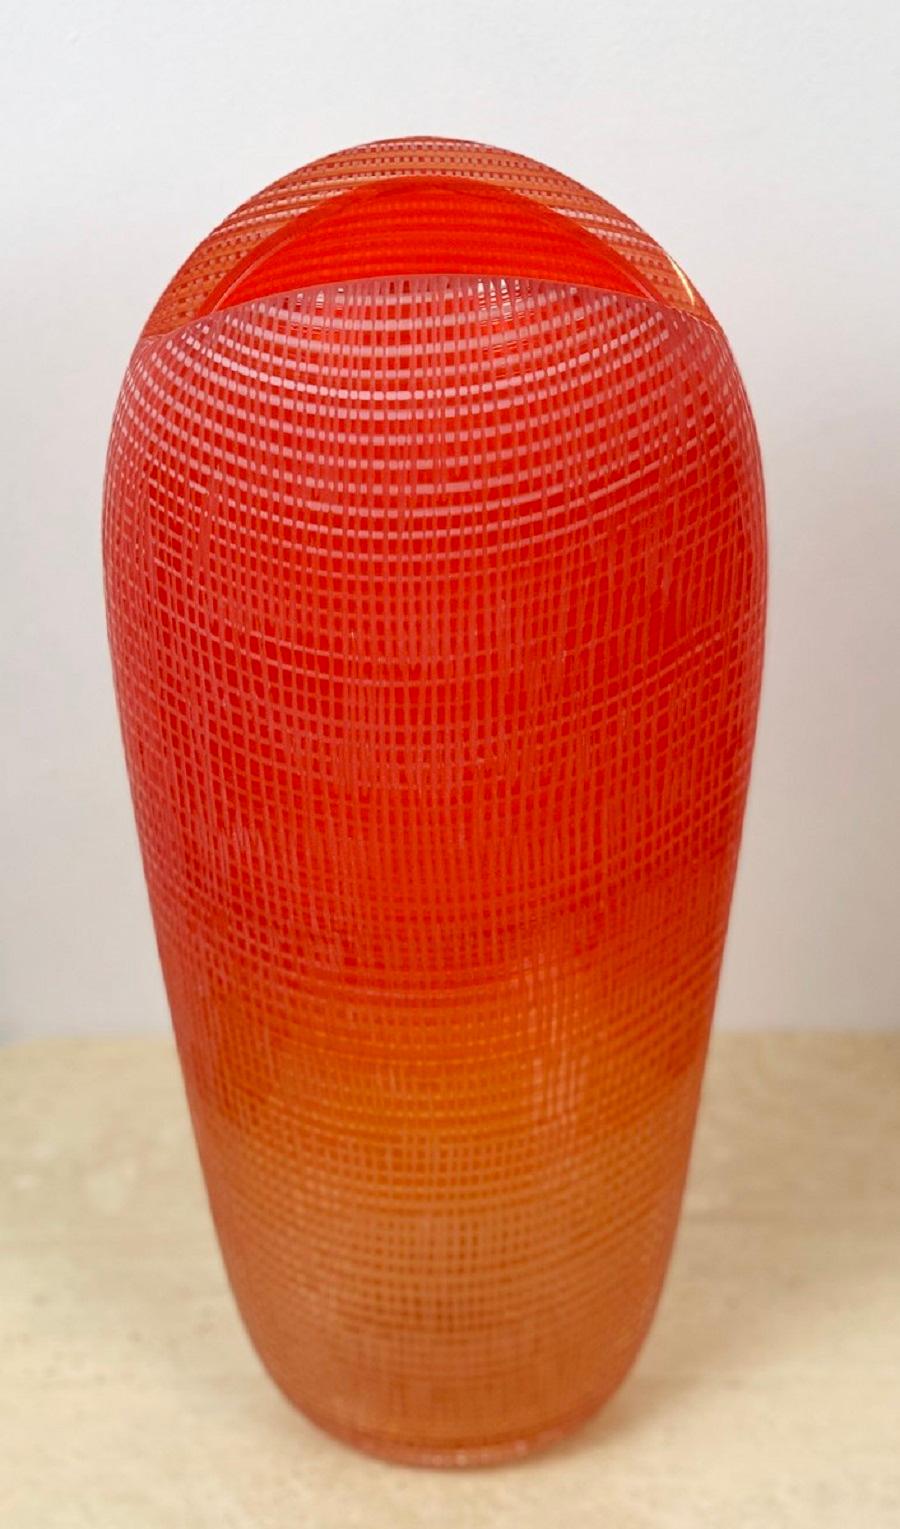 'Peoci' vase by Antonio Da Ros Gino Cenedese, circa 1990s.